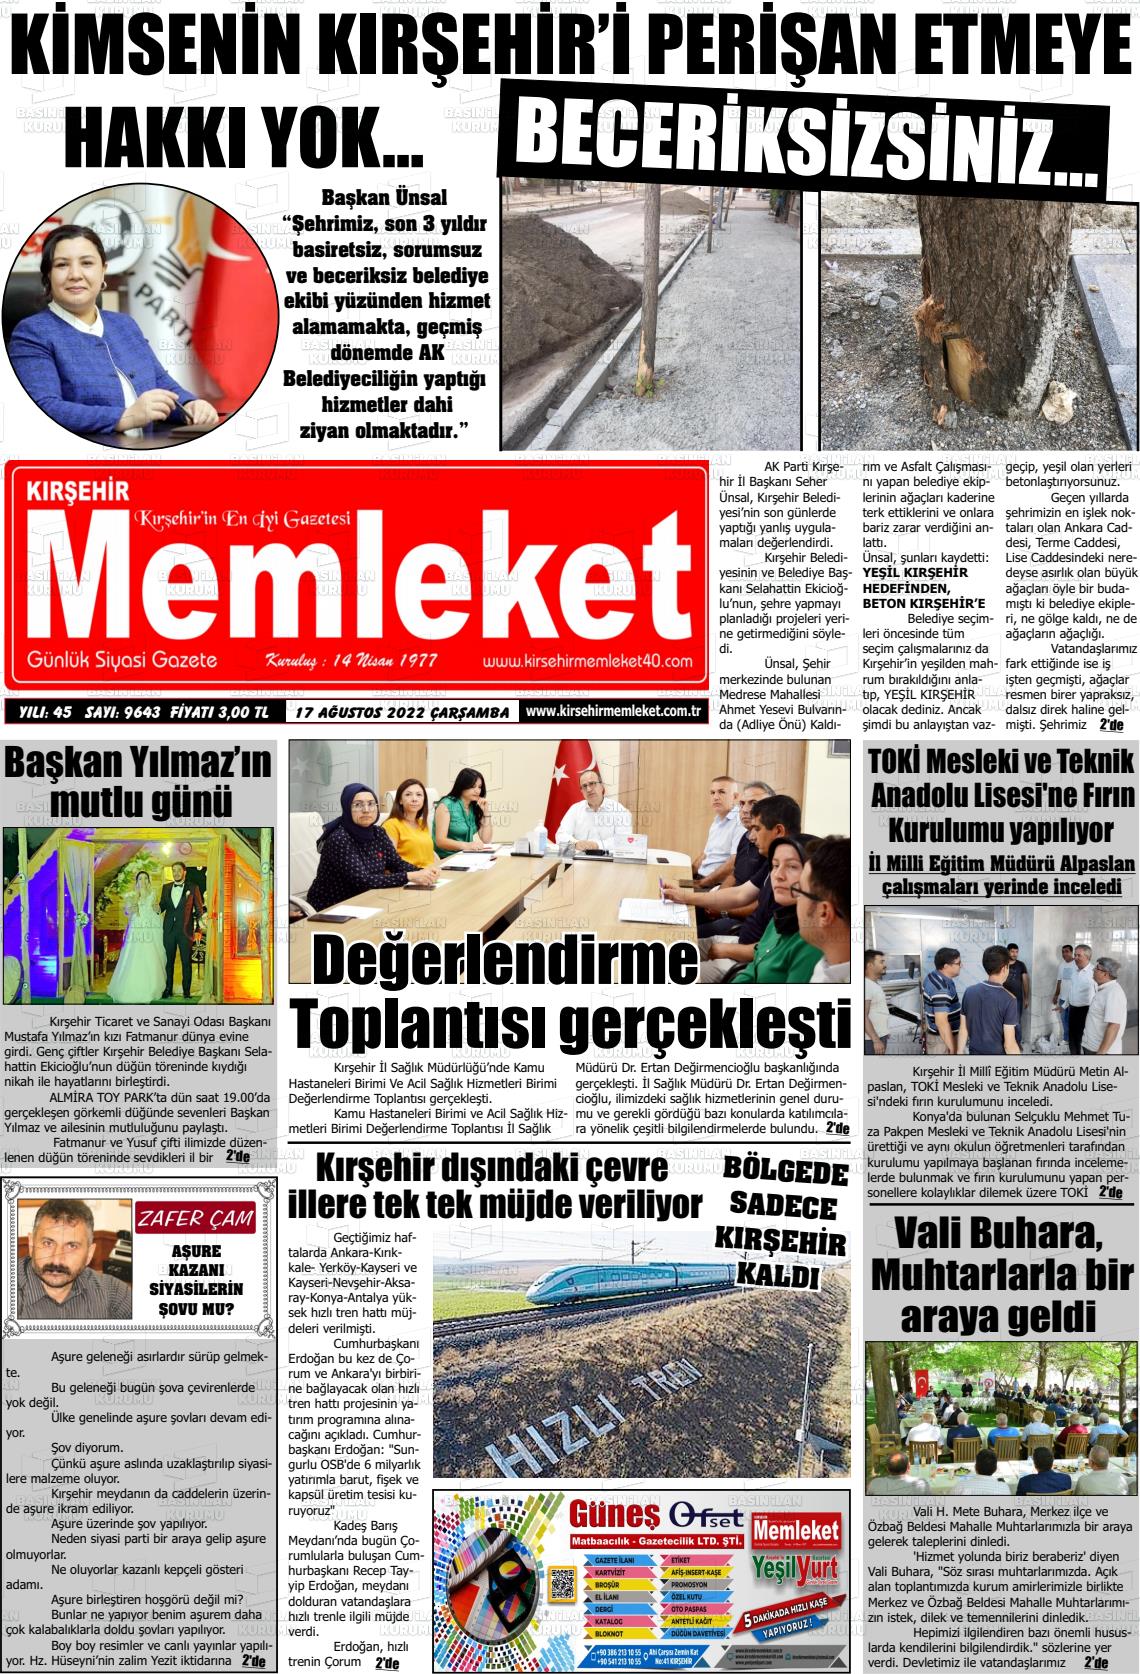 17 Ağustos 2022 Kırşehir Memleket Gazete Manşeti